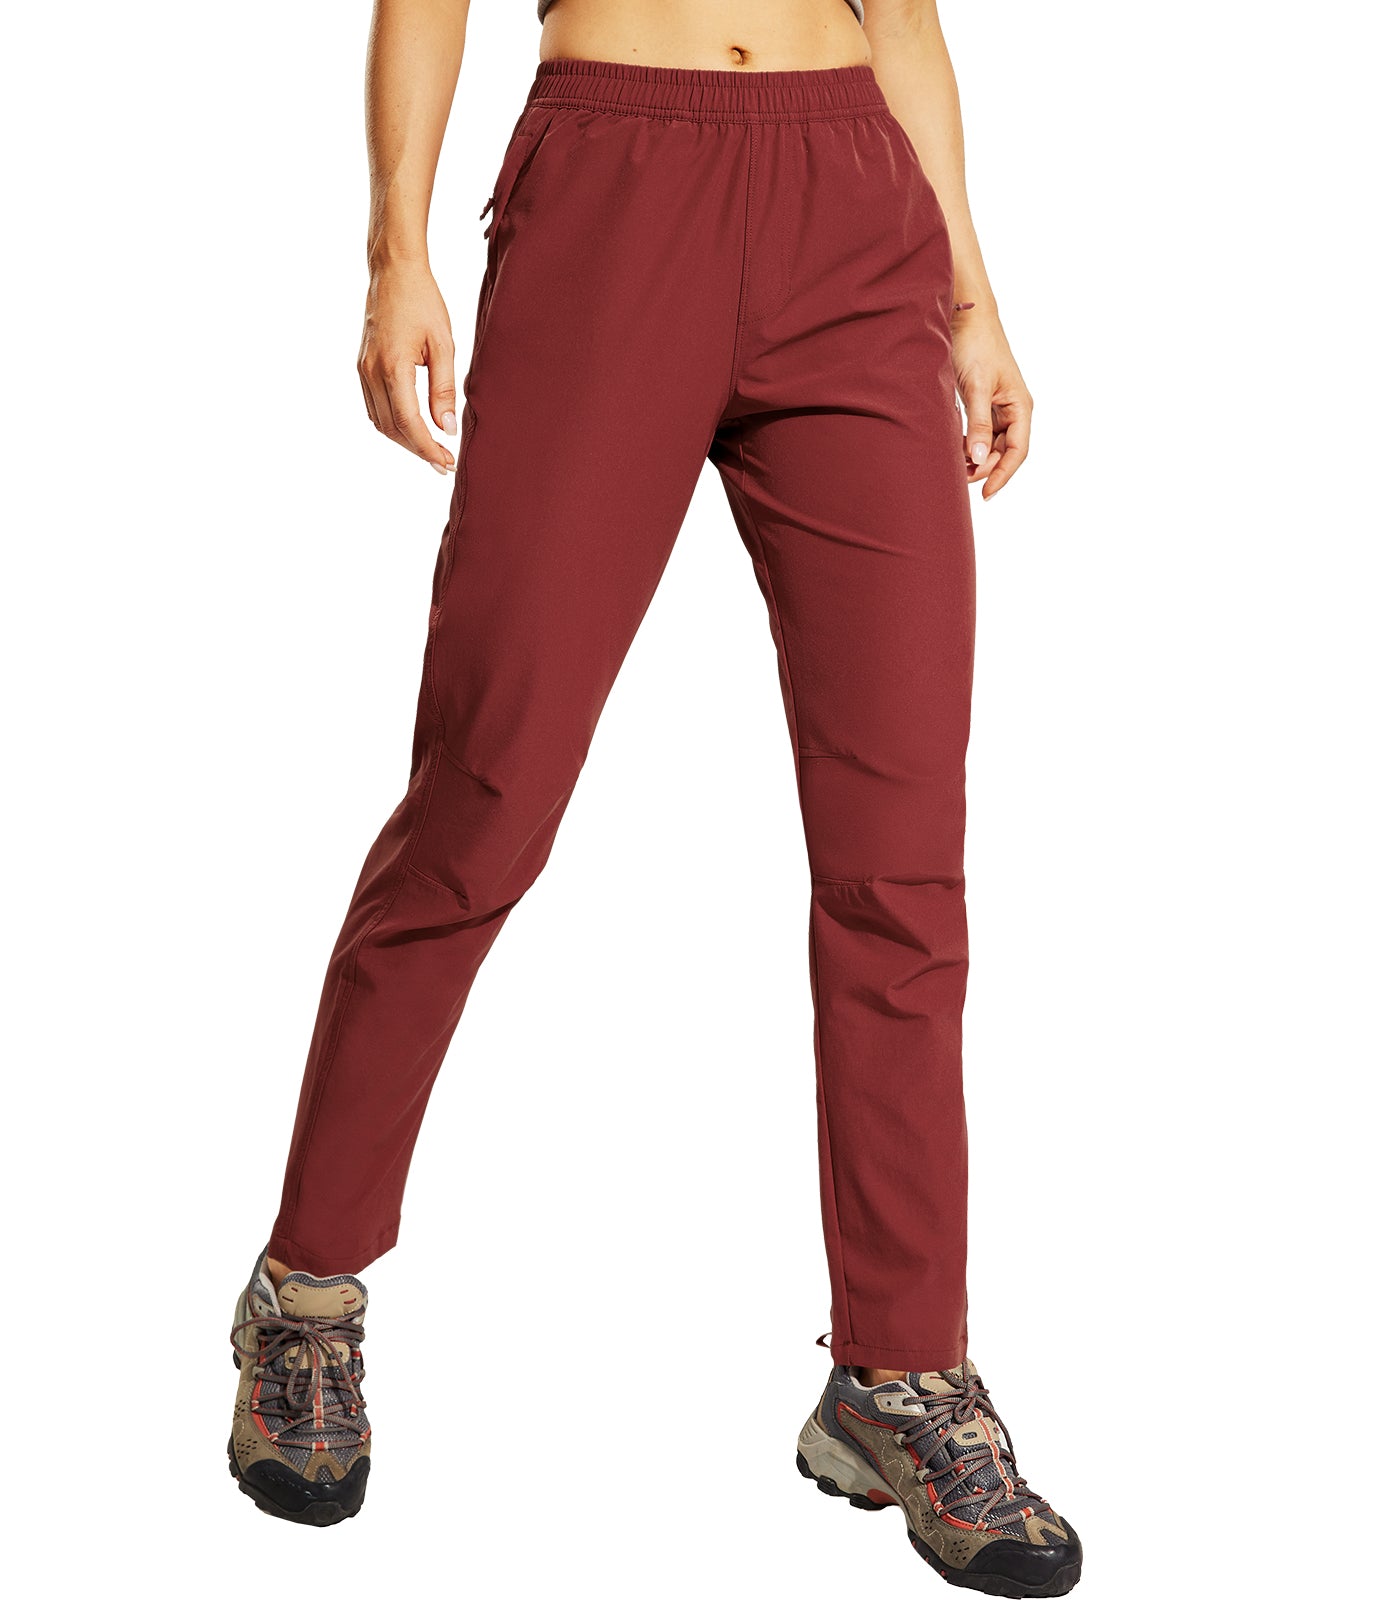 Women's Hiking Pants Quick Dry Lightweight Cargo Pants - Burgundy / XS